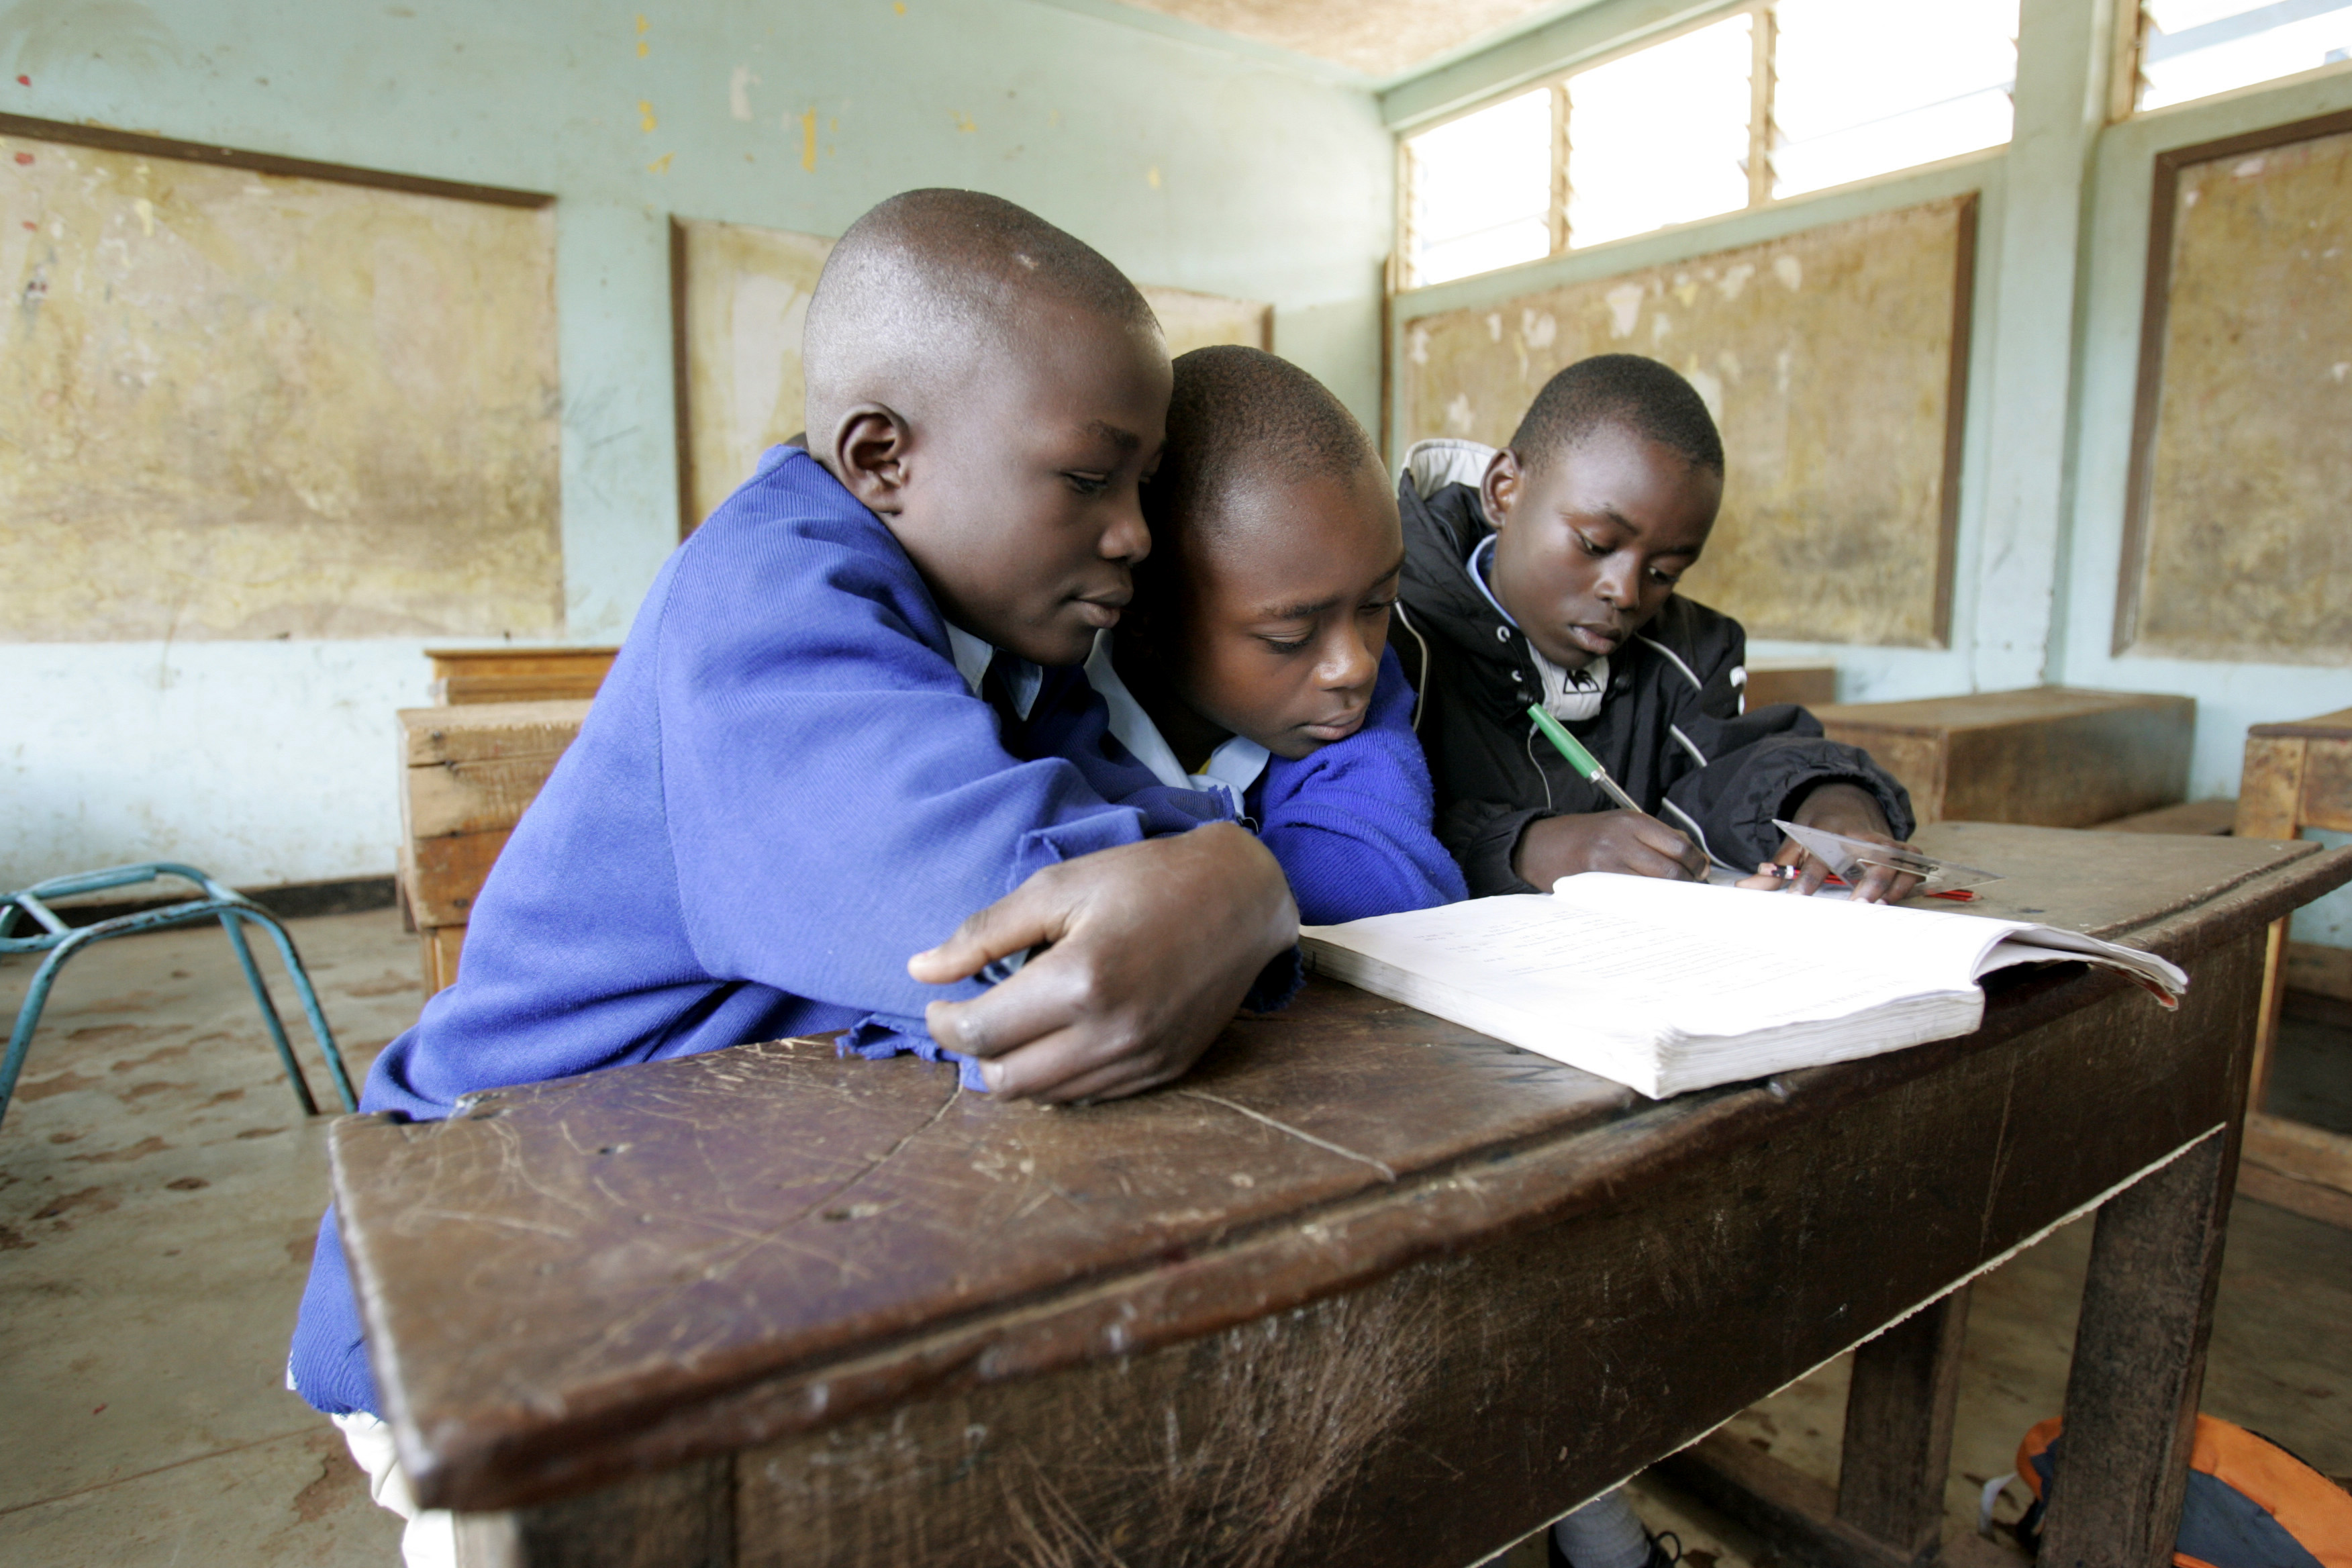 objectives of education in kenya